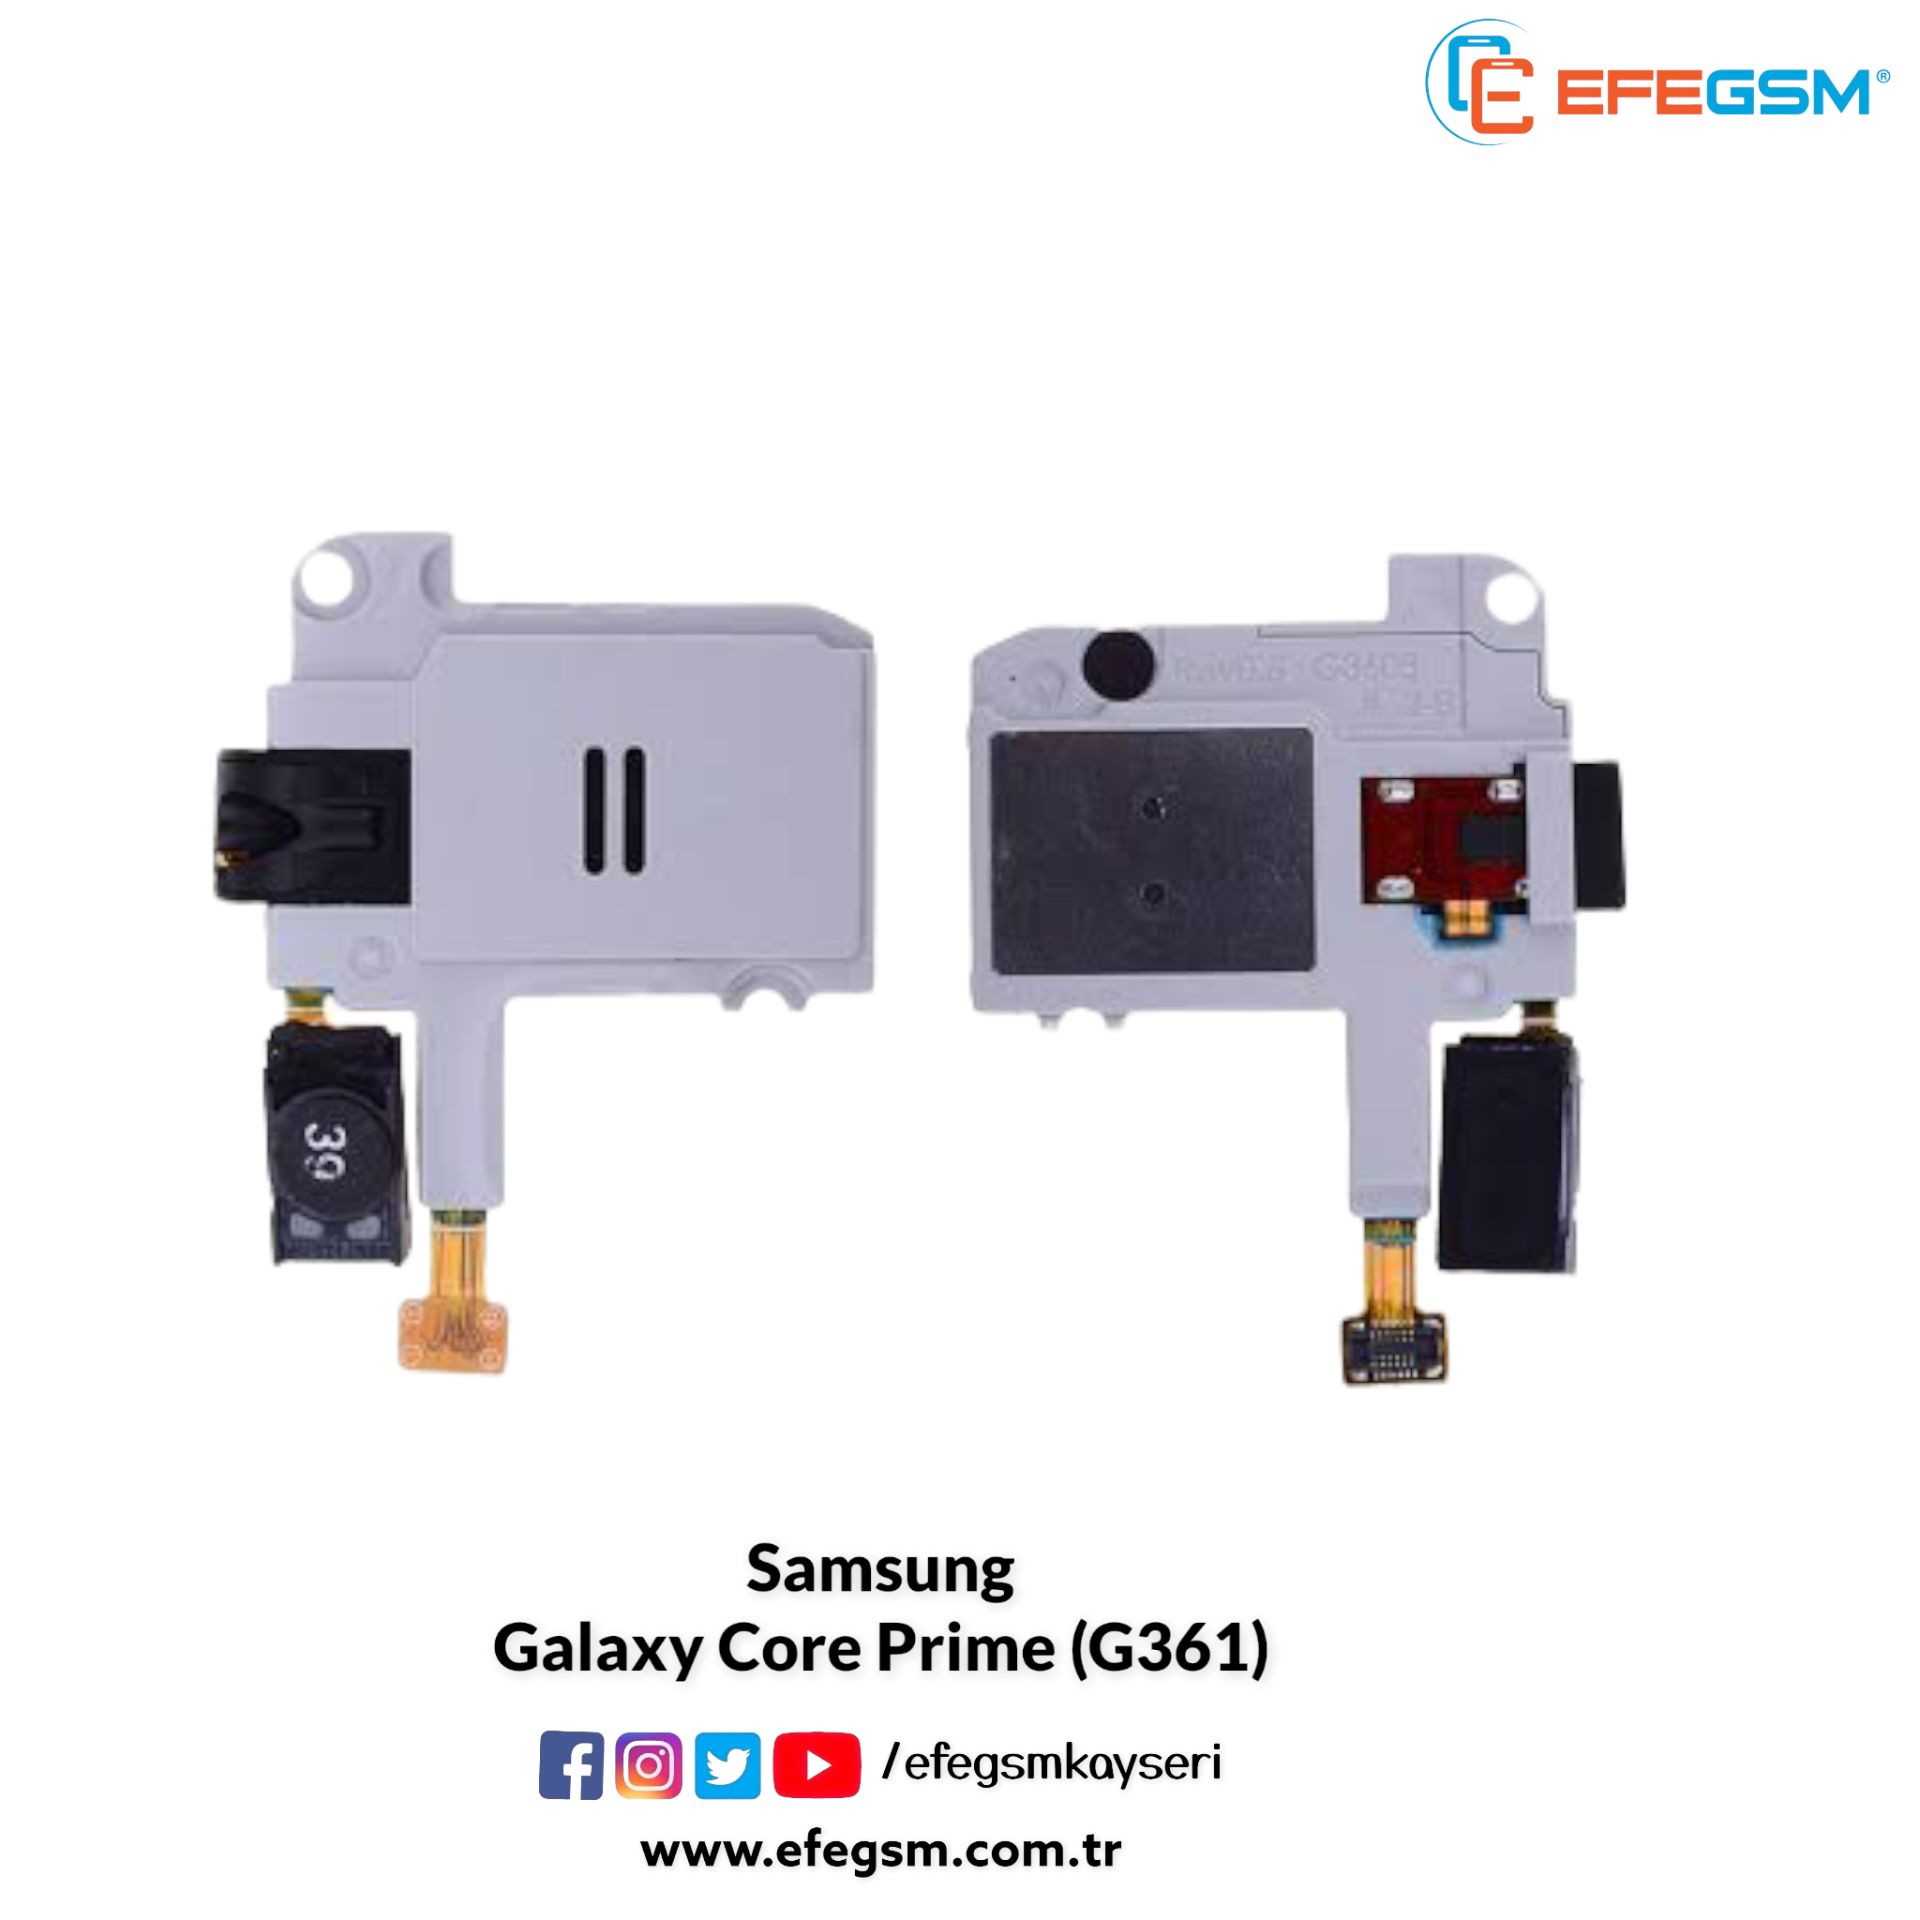 Samsung Galaxy Core Prime (G361) Bazır